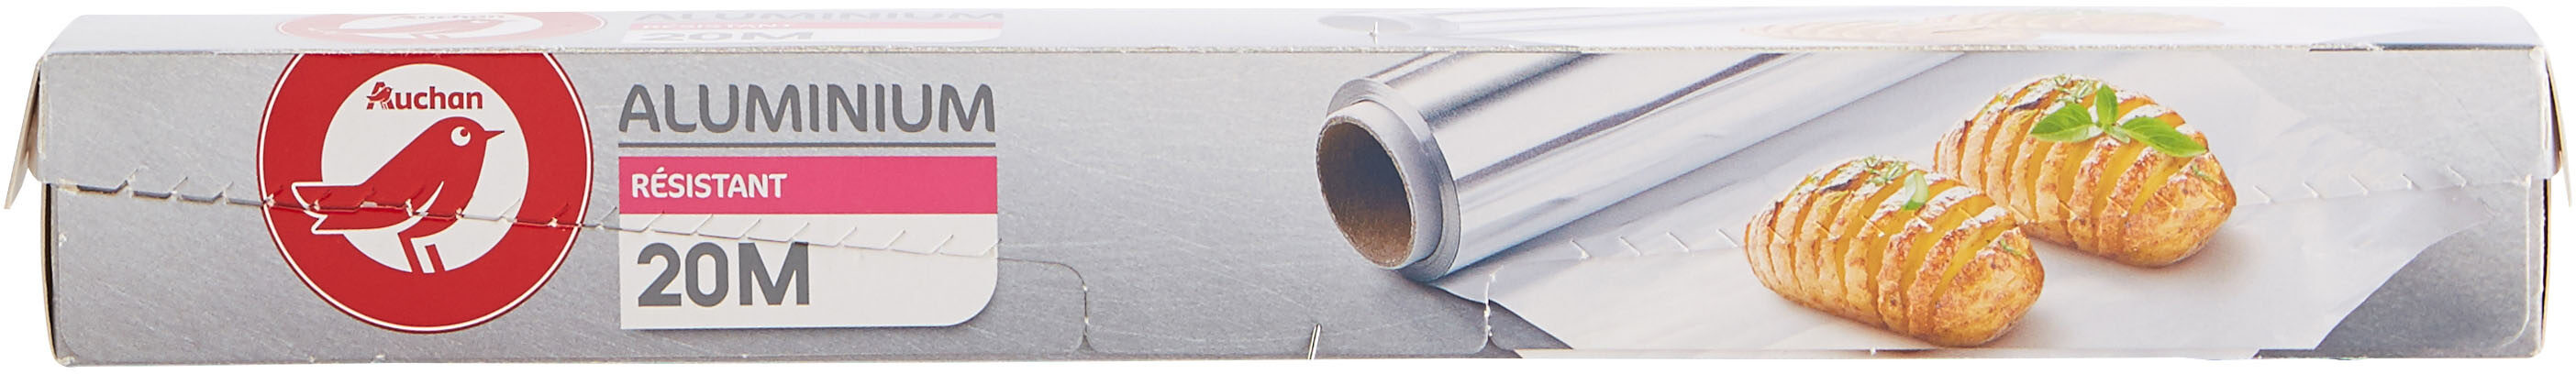 Rouleau aluminium 0.29 X 20M - Product - en